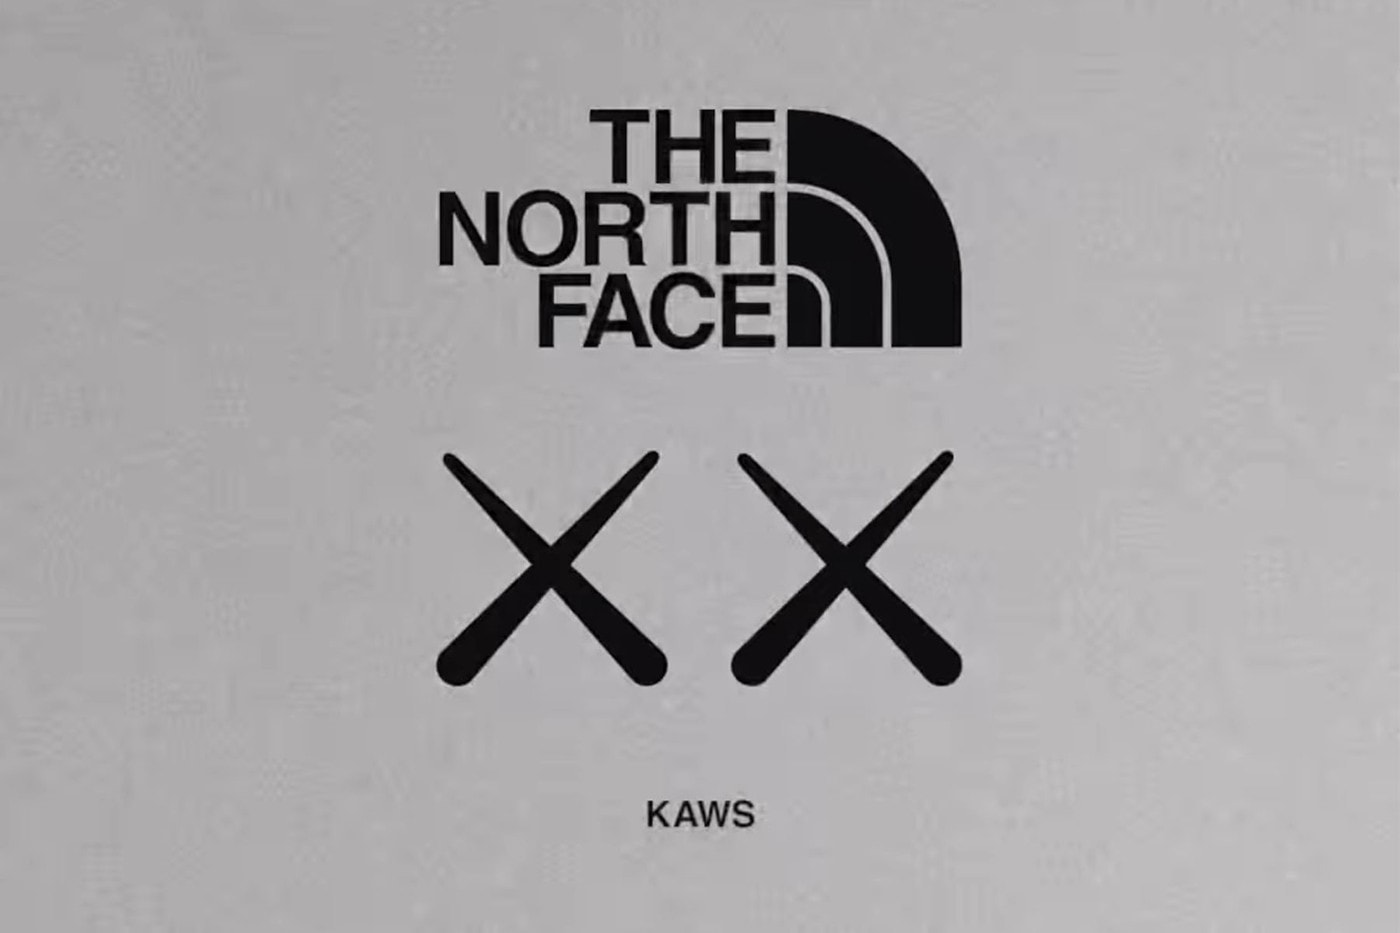 The North Face XX KAWS 全新第二波联名系列即将登场